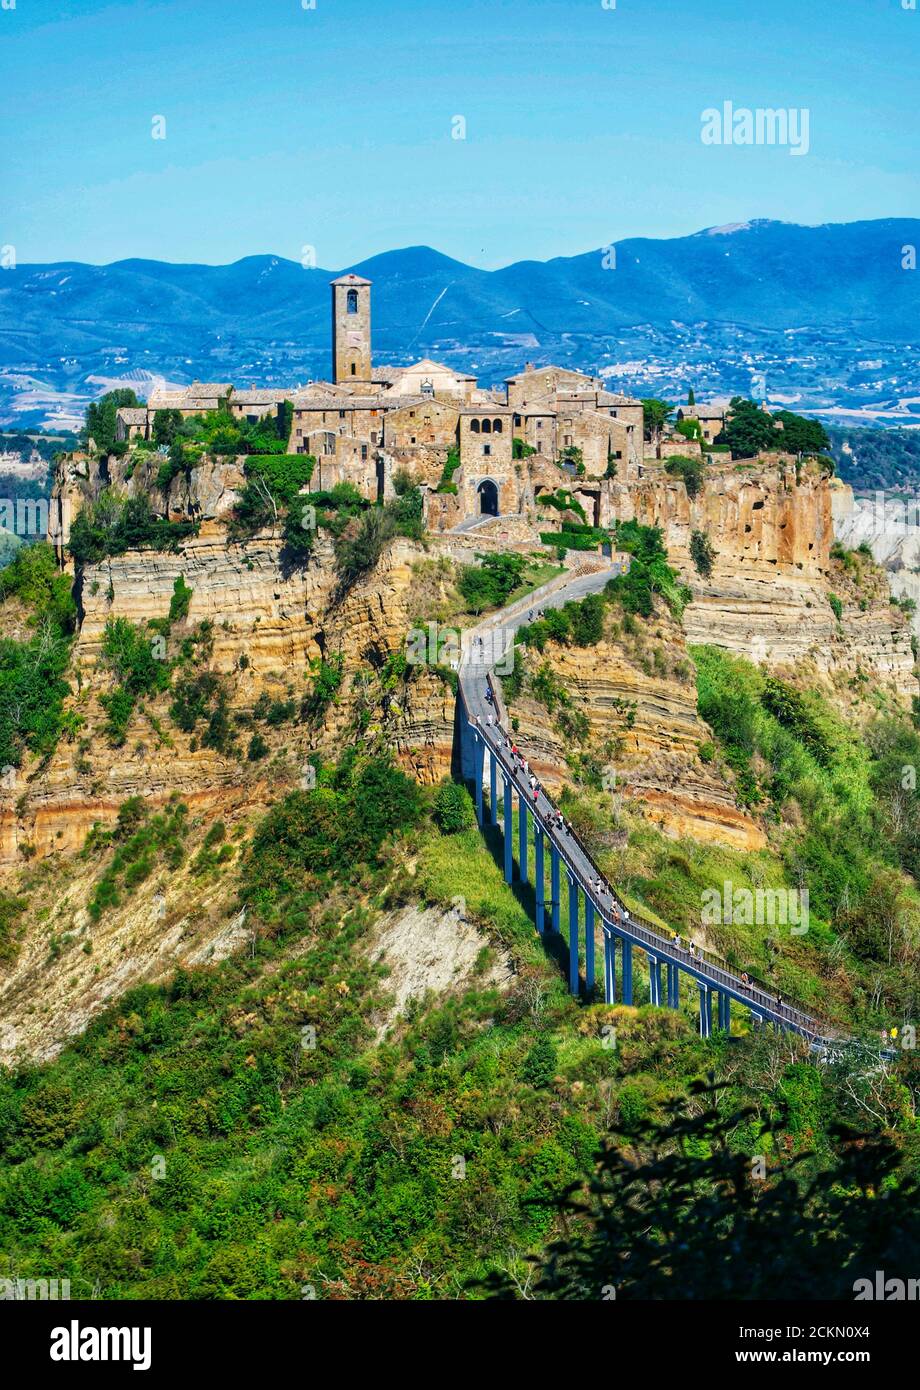 panoramic view of etruscan town of Civita di Bagnoregio, lazio, italy Stock Photo